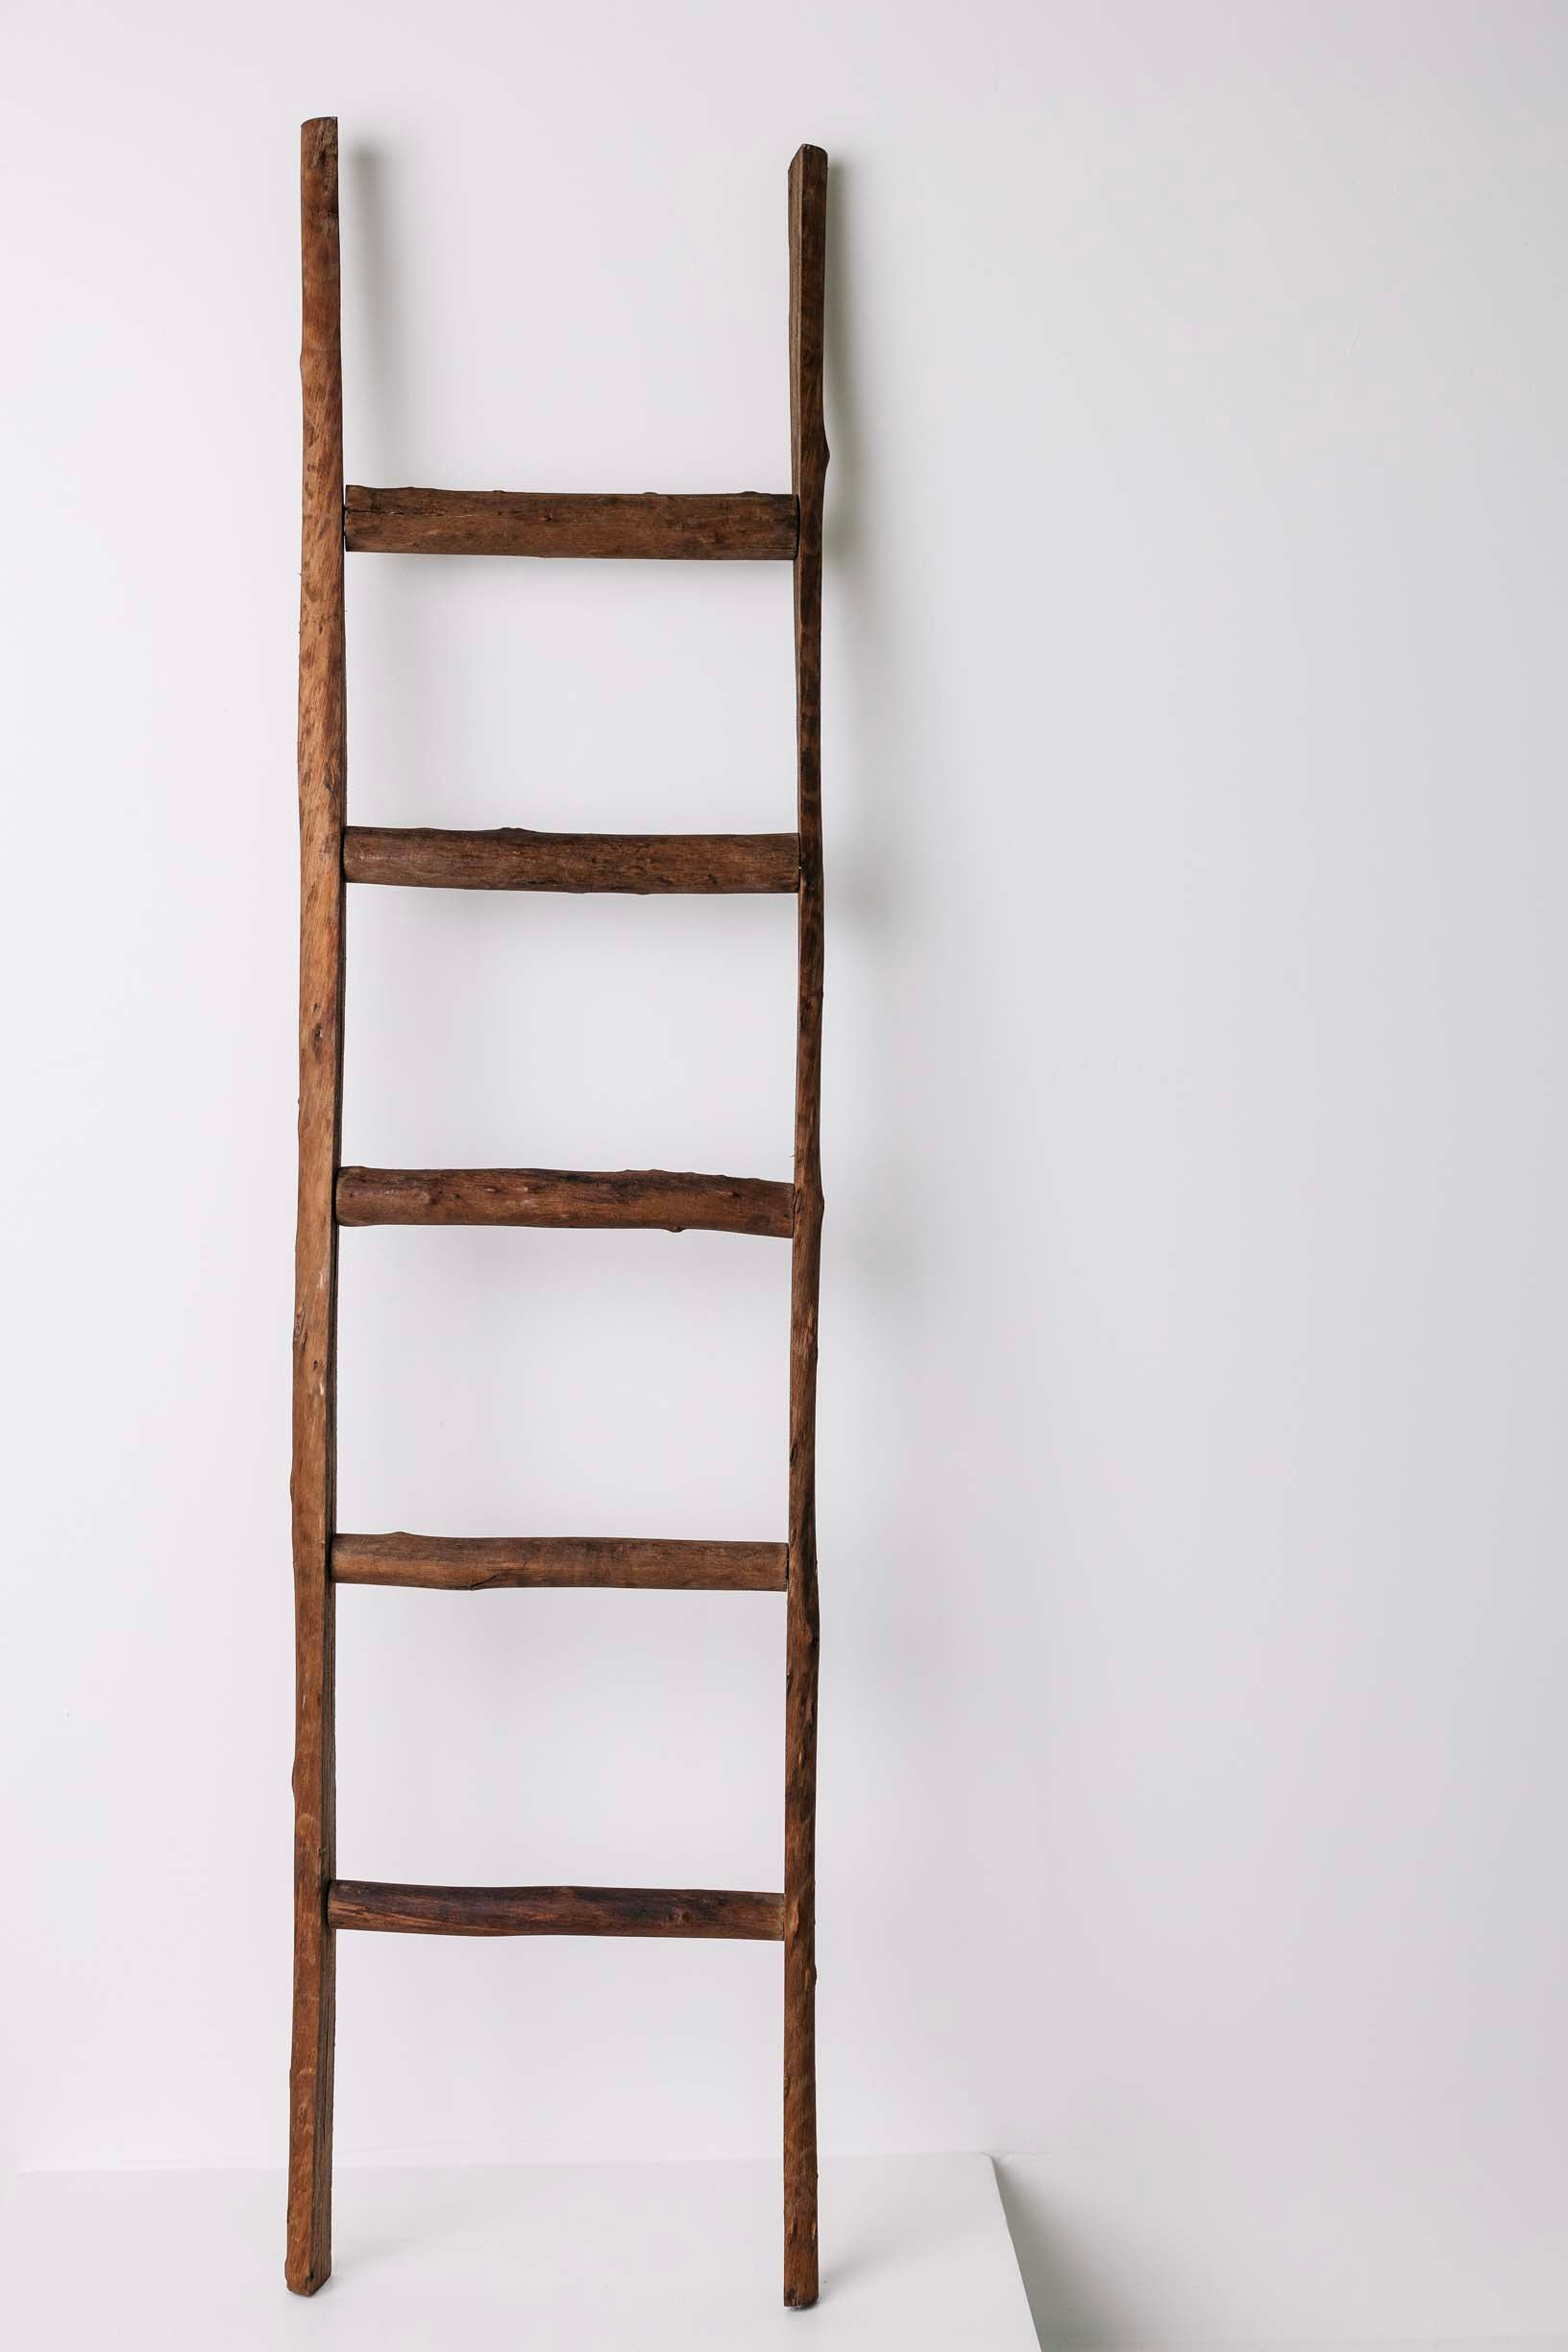 Uitpakken verkrachting circulatie Kindling Wood Decorative Ladder - WAREHOUSE PICKUP ONLY — THELIFESTYLEDCO  Shop